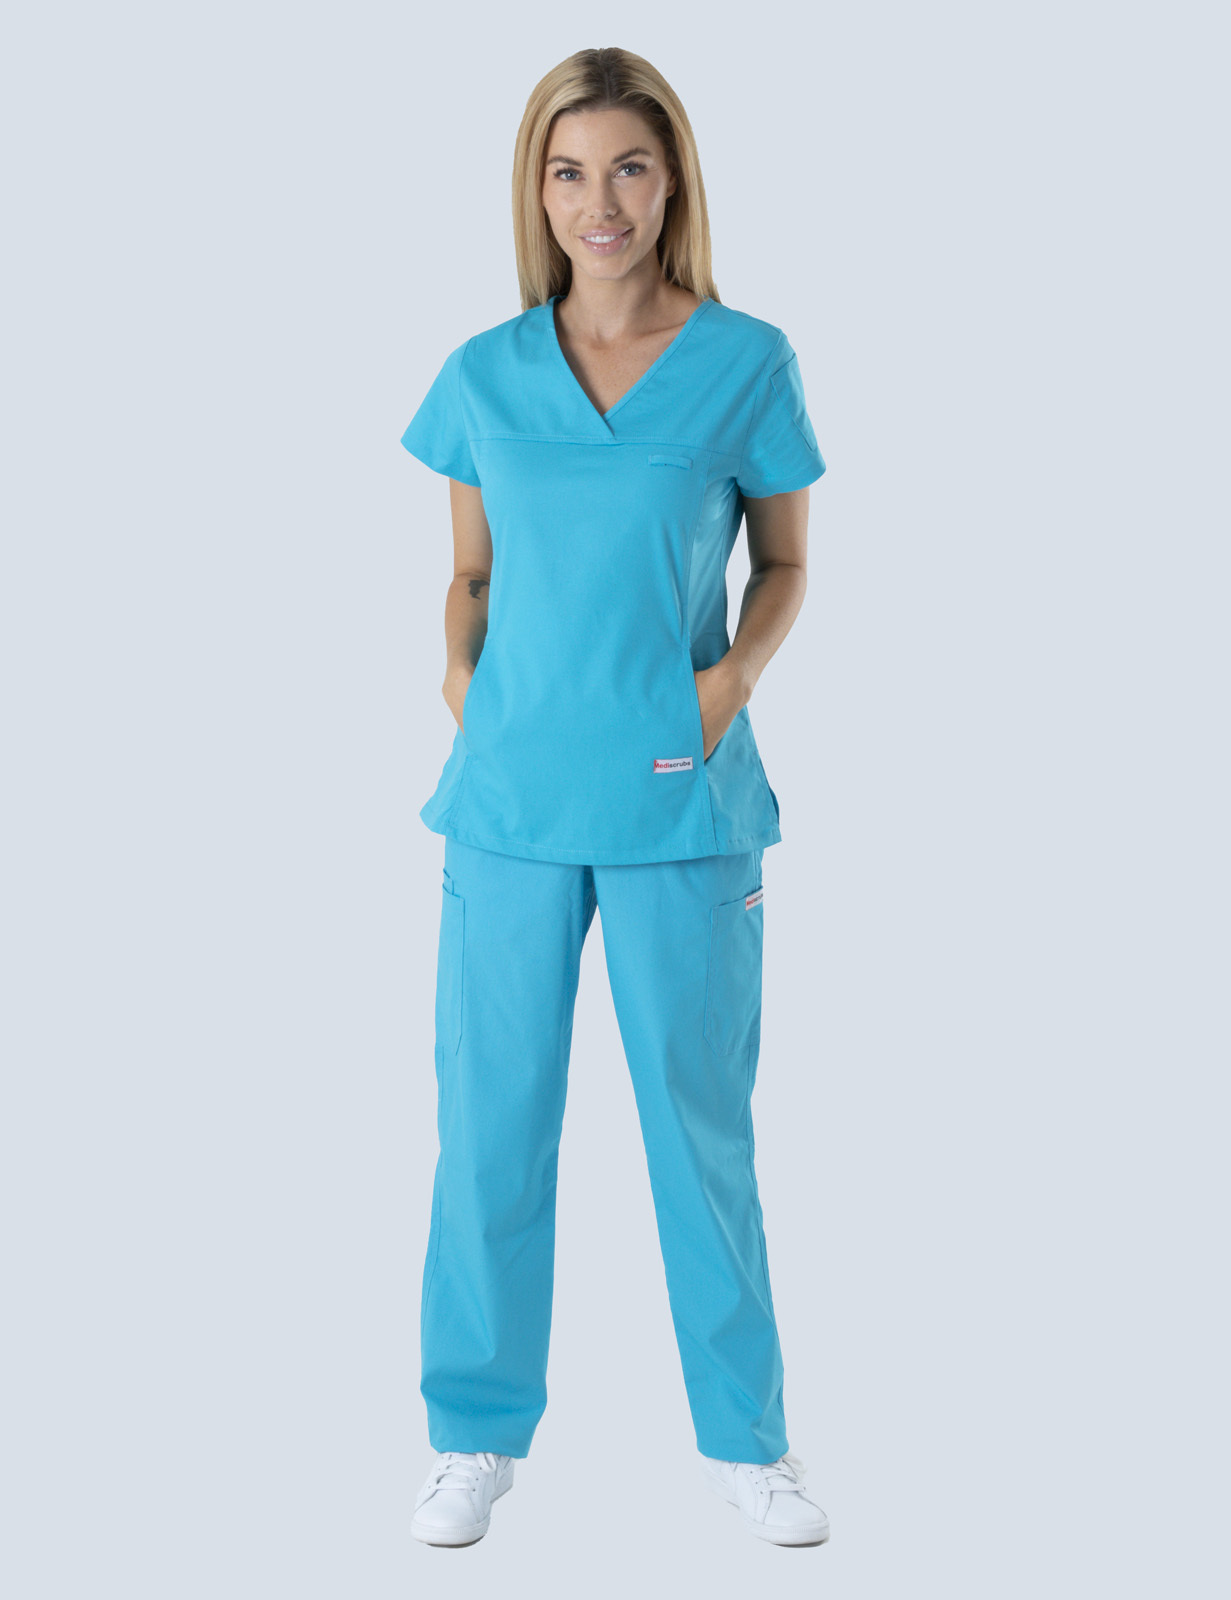 Women's Navy Scrubs - Comfy & Stylish Women's Navy Blue Scrubs